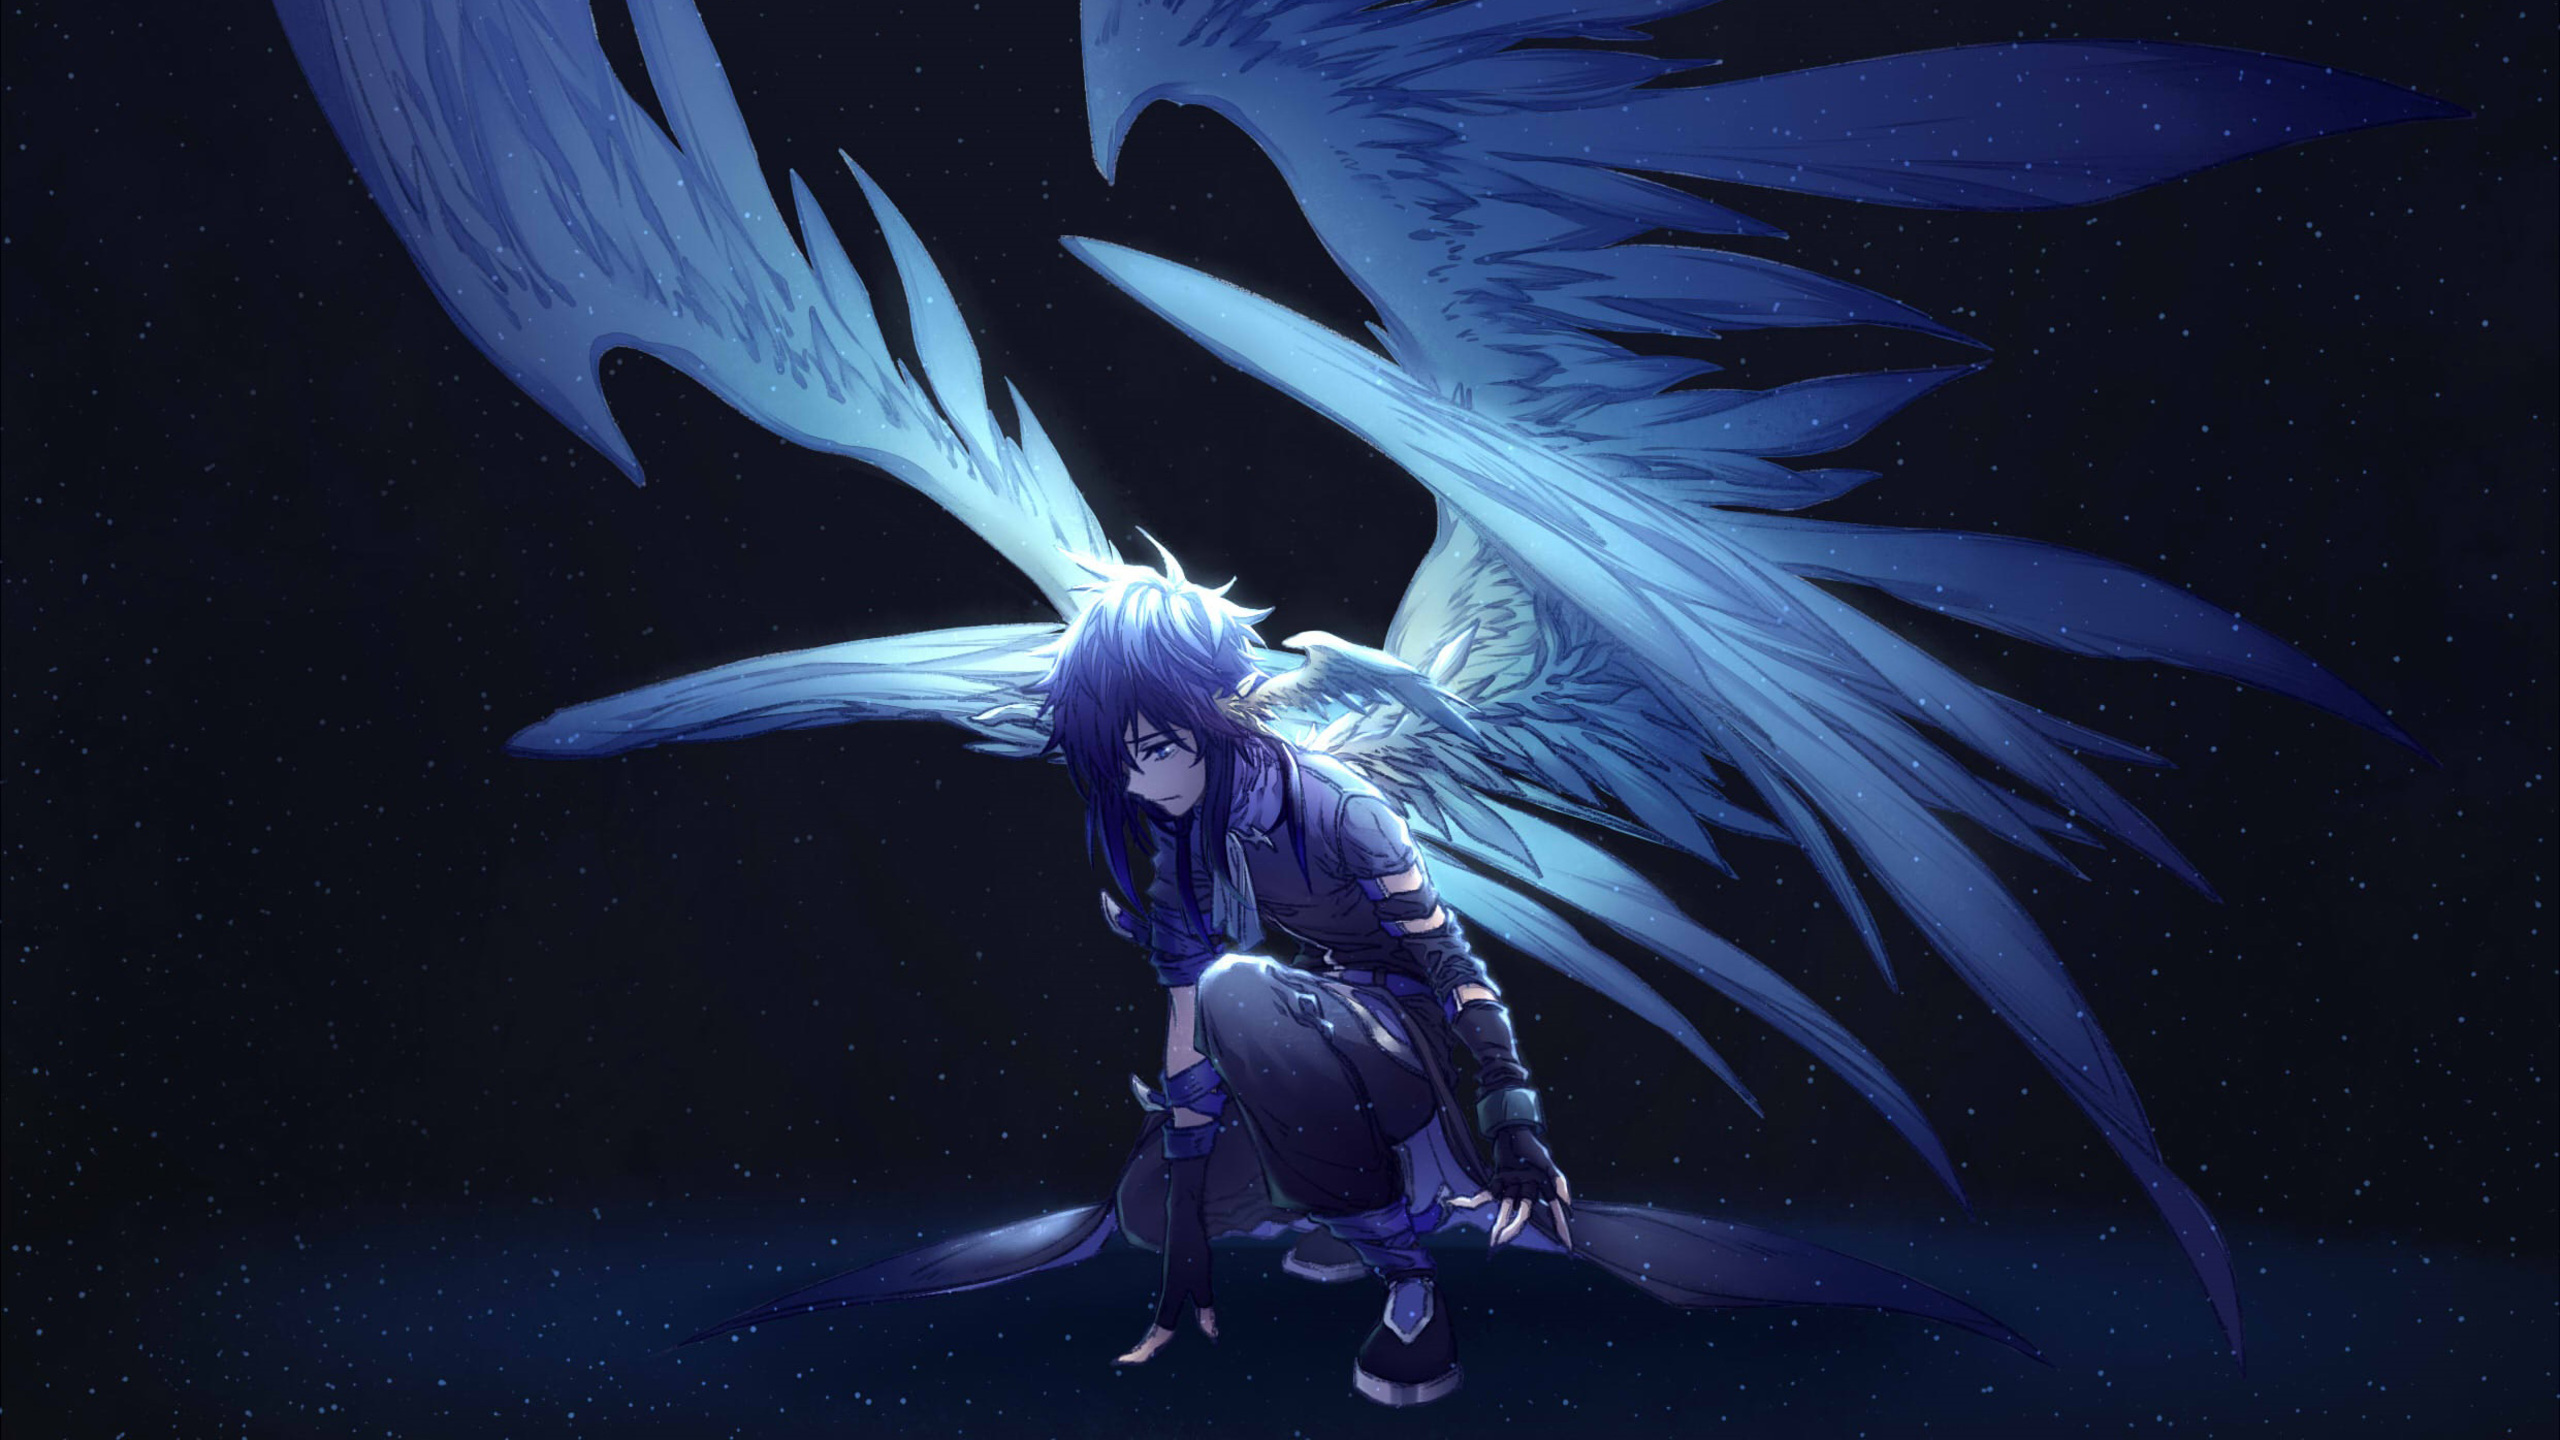 Angel Anime In 2560x1440 Resolution. angel-anime-jn.jpg. 